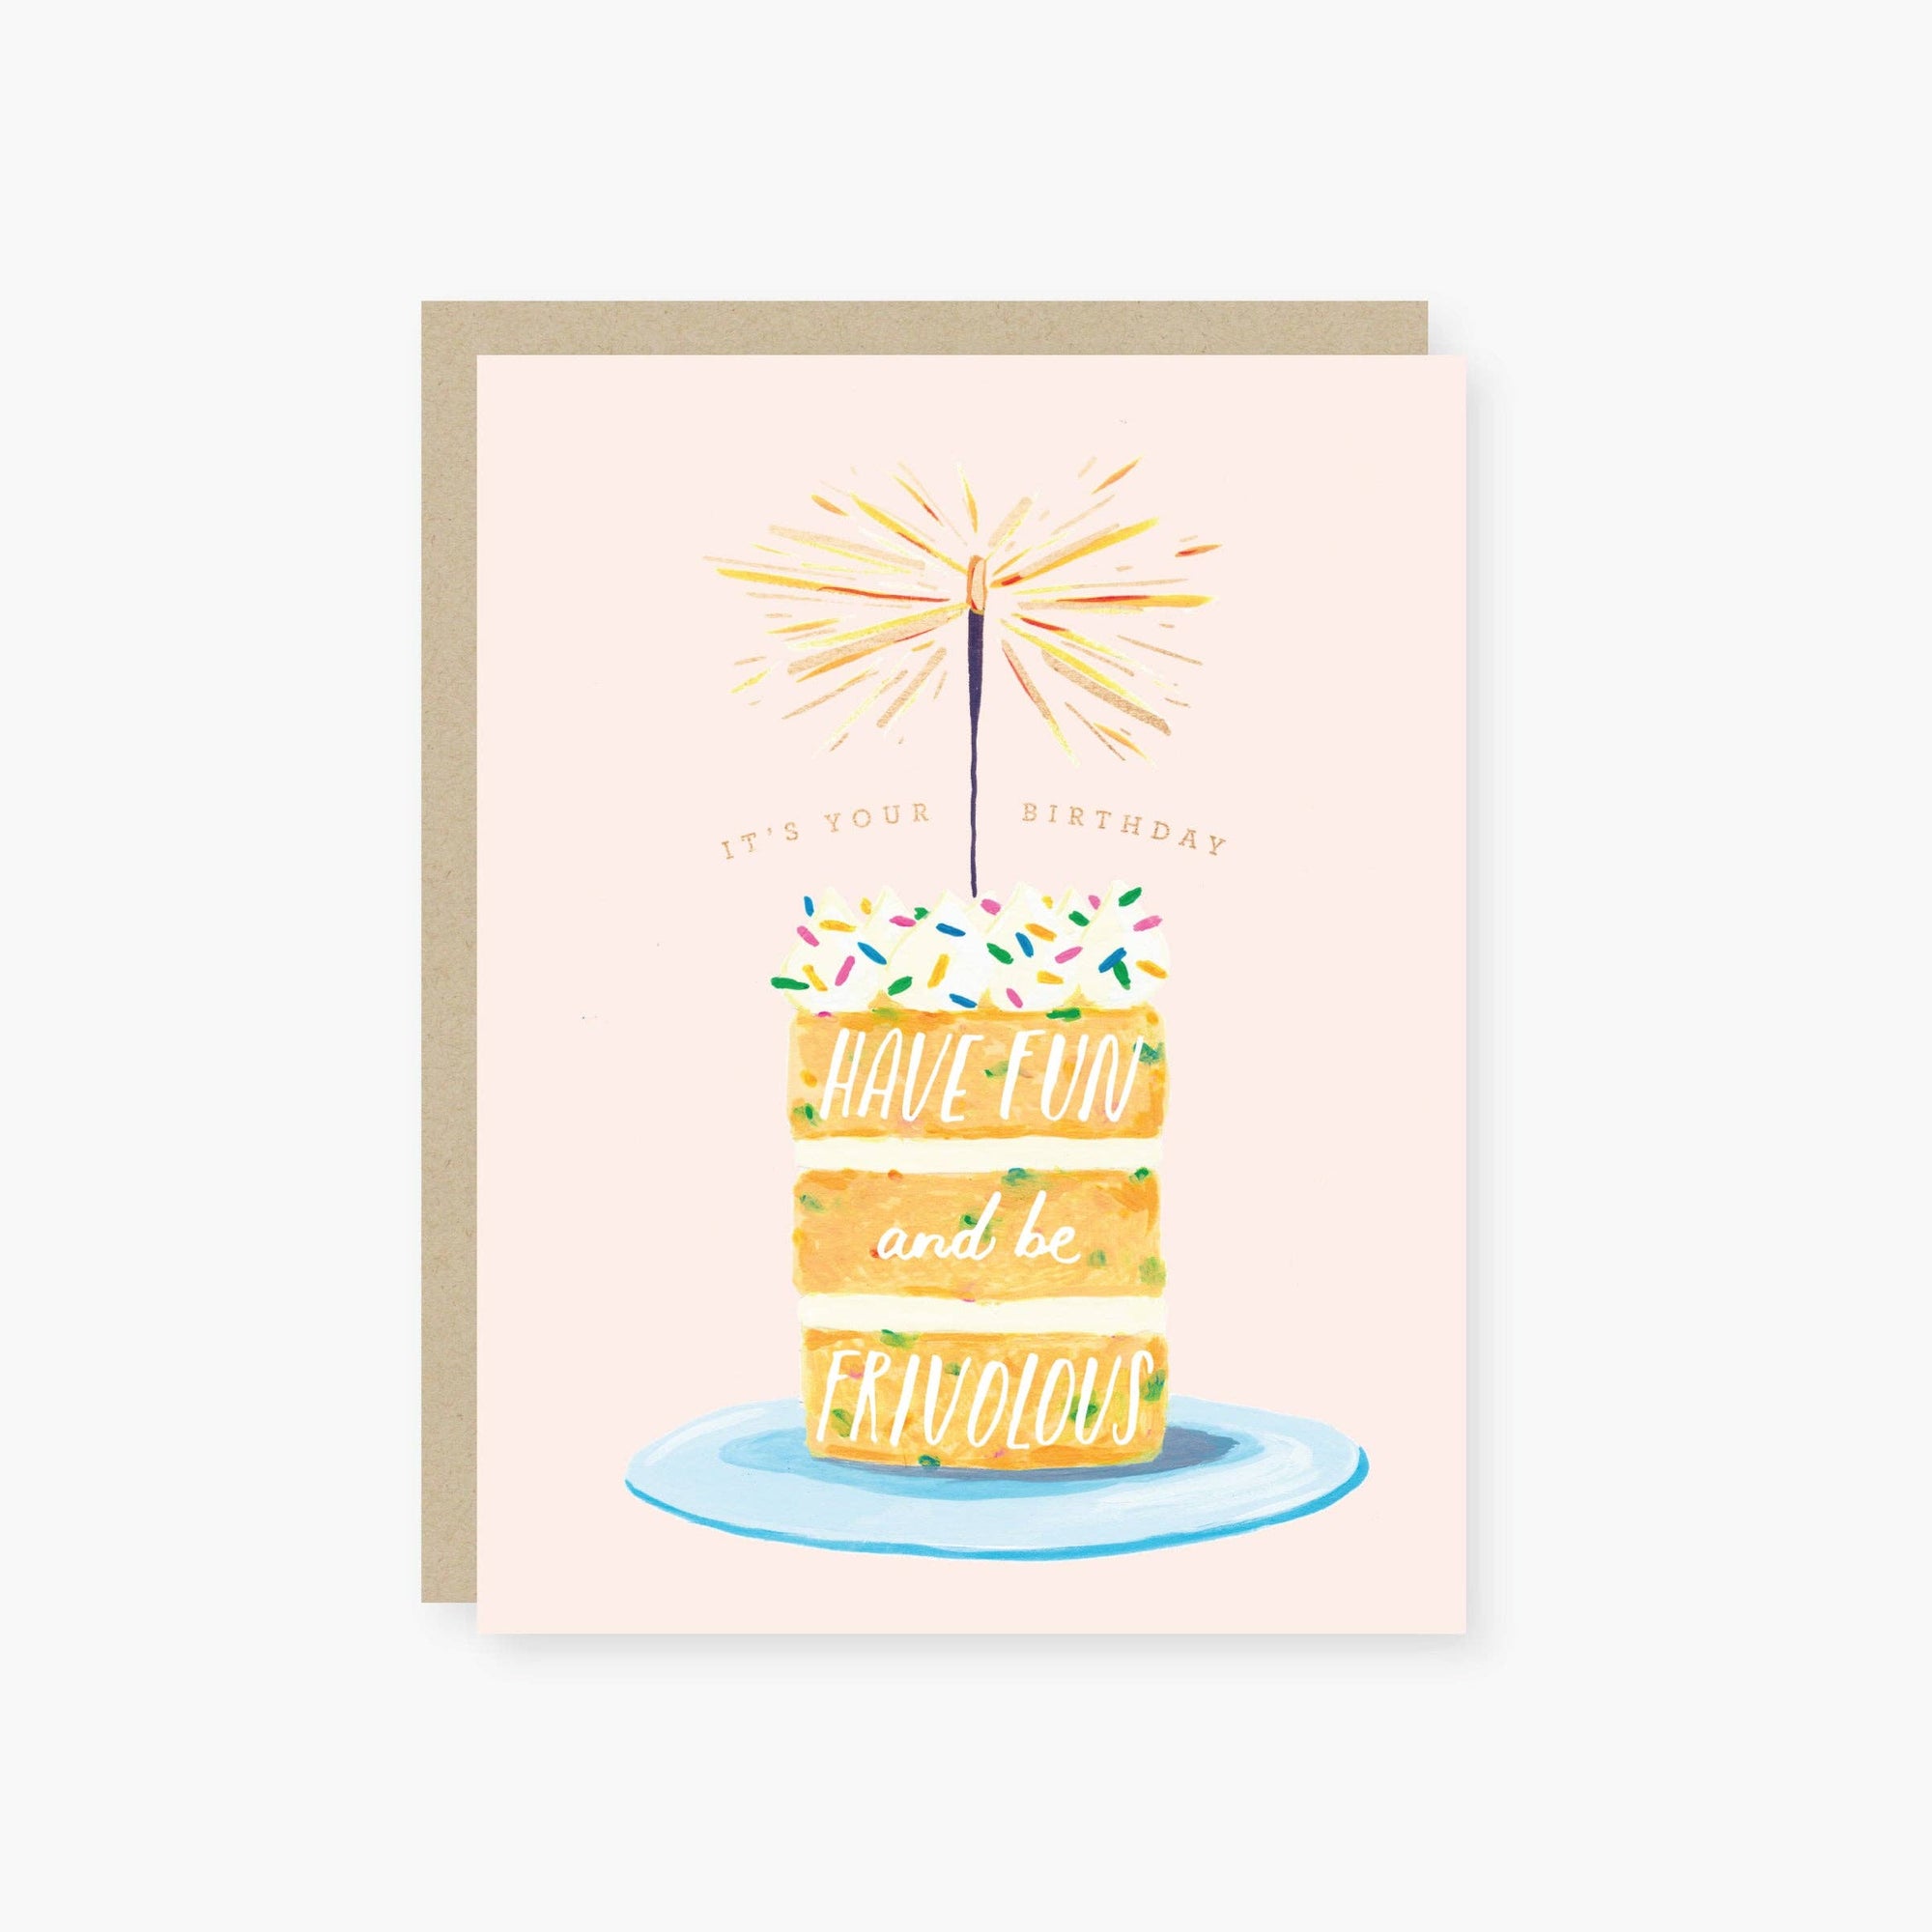 Fun and frivolous sparkler cake Birthday Card: Single